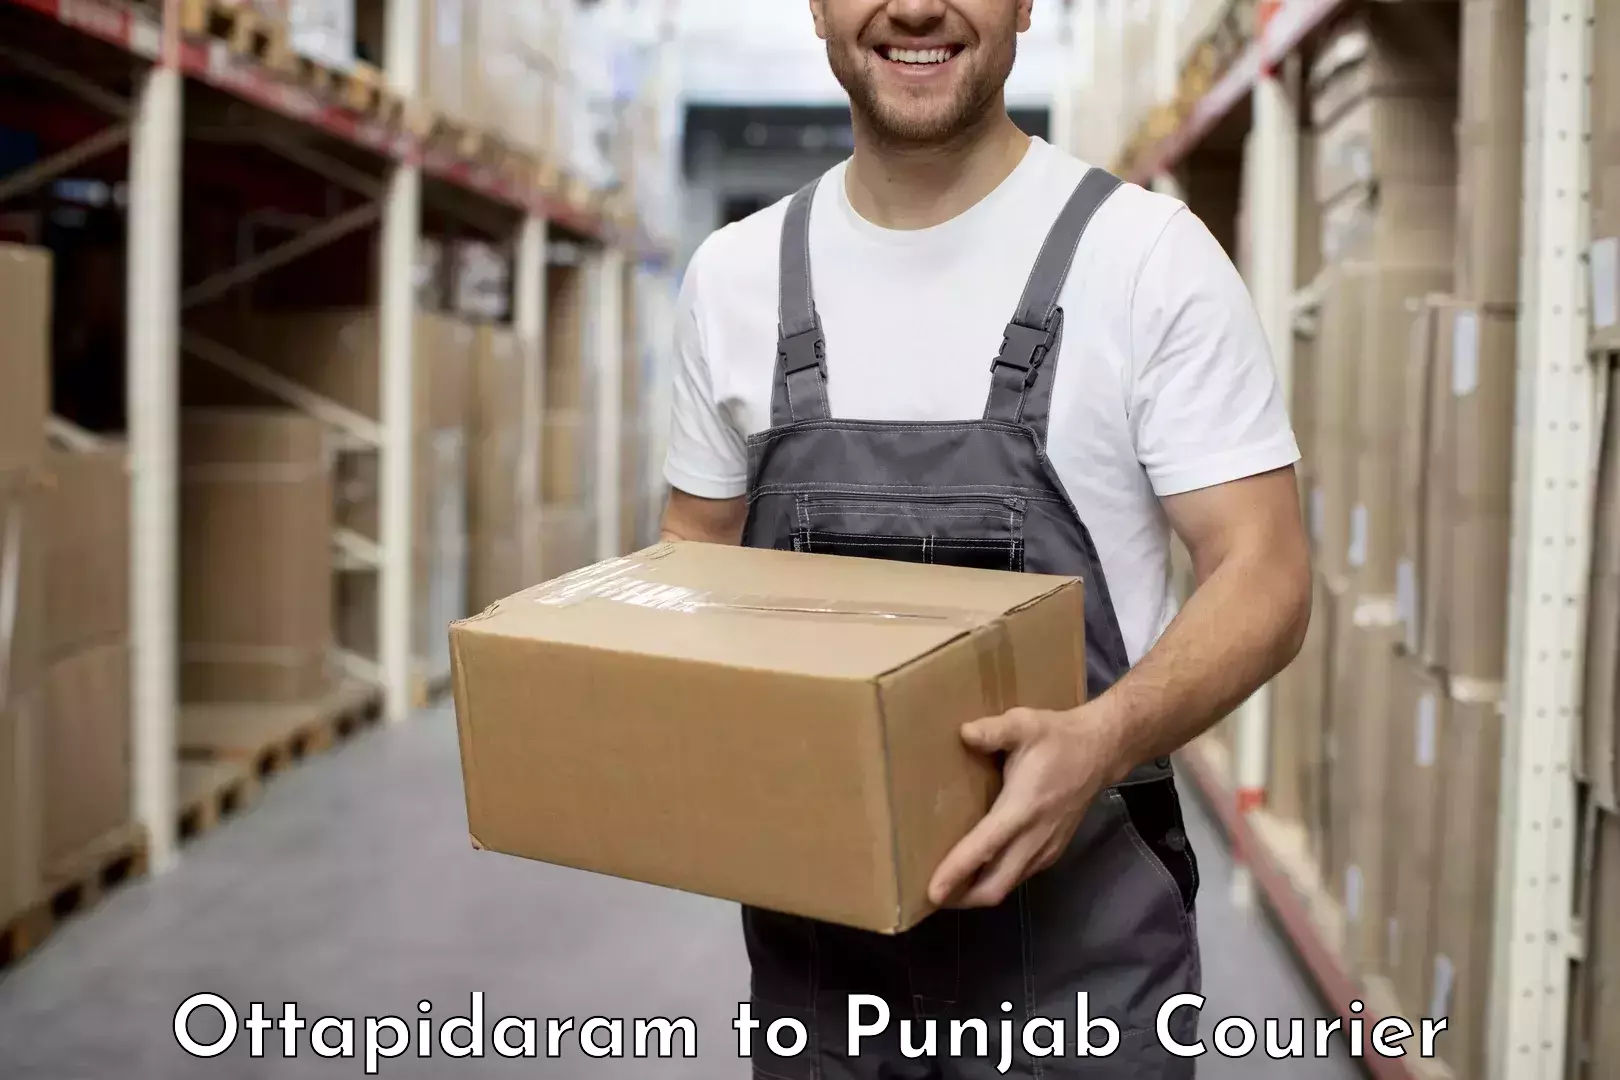 Professional parcel services Ottapidaram to Punjab